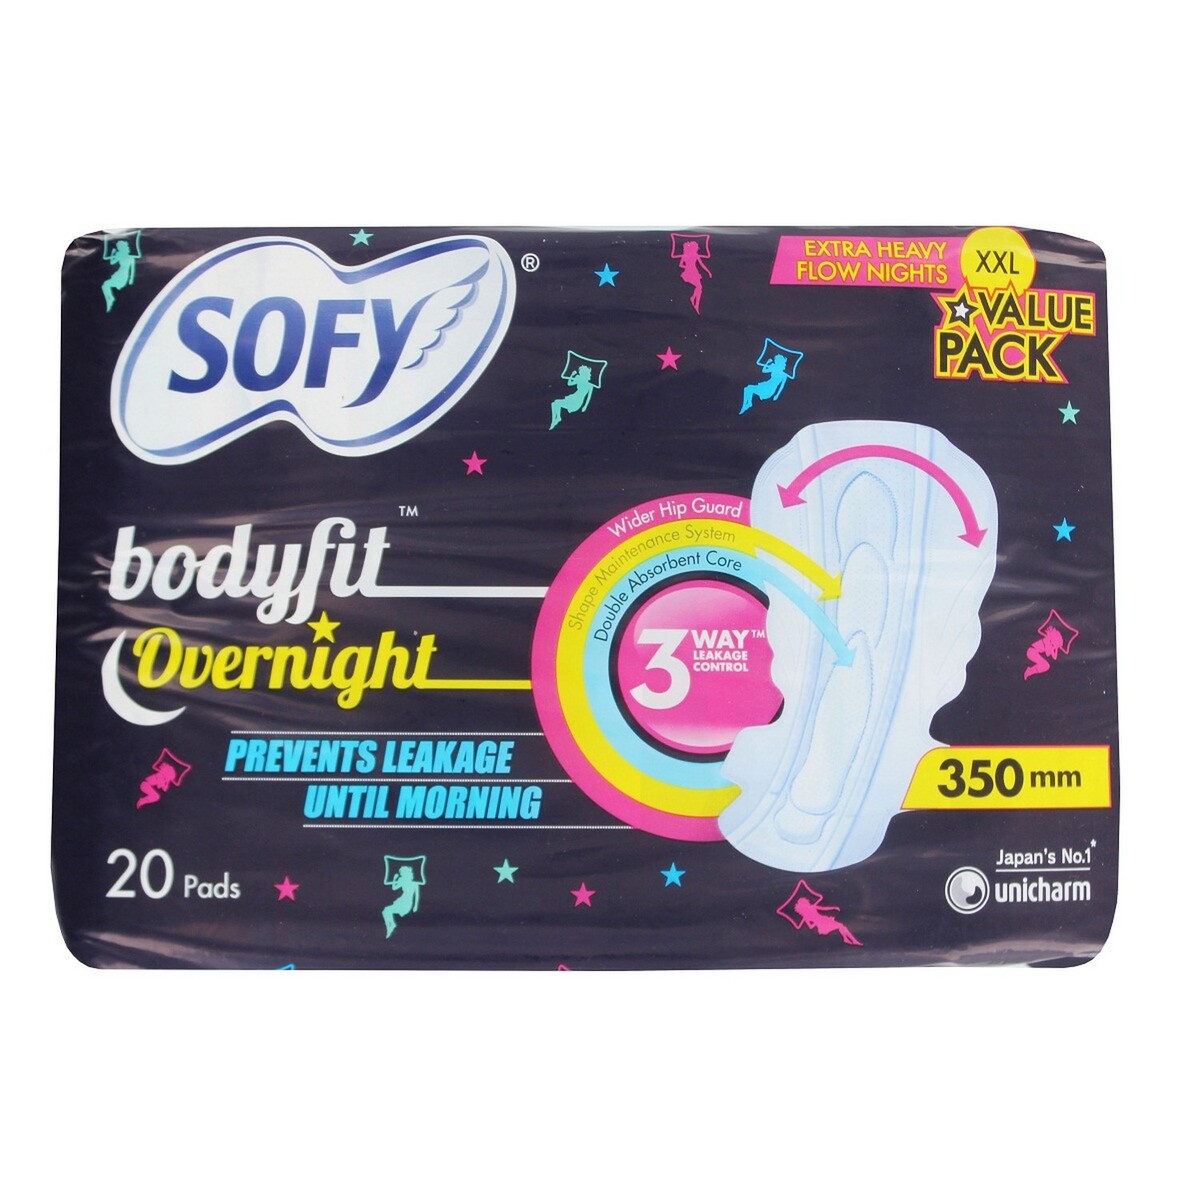 Sofy Bodyfit Overnight XXL 20's